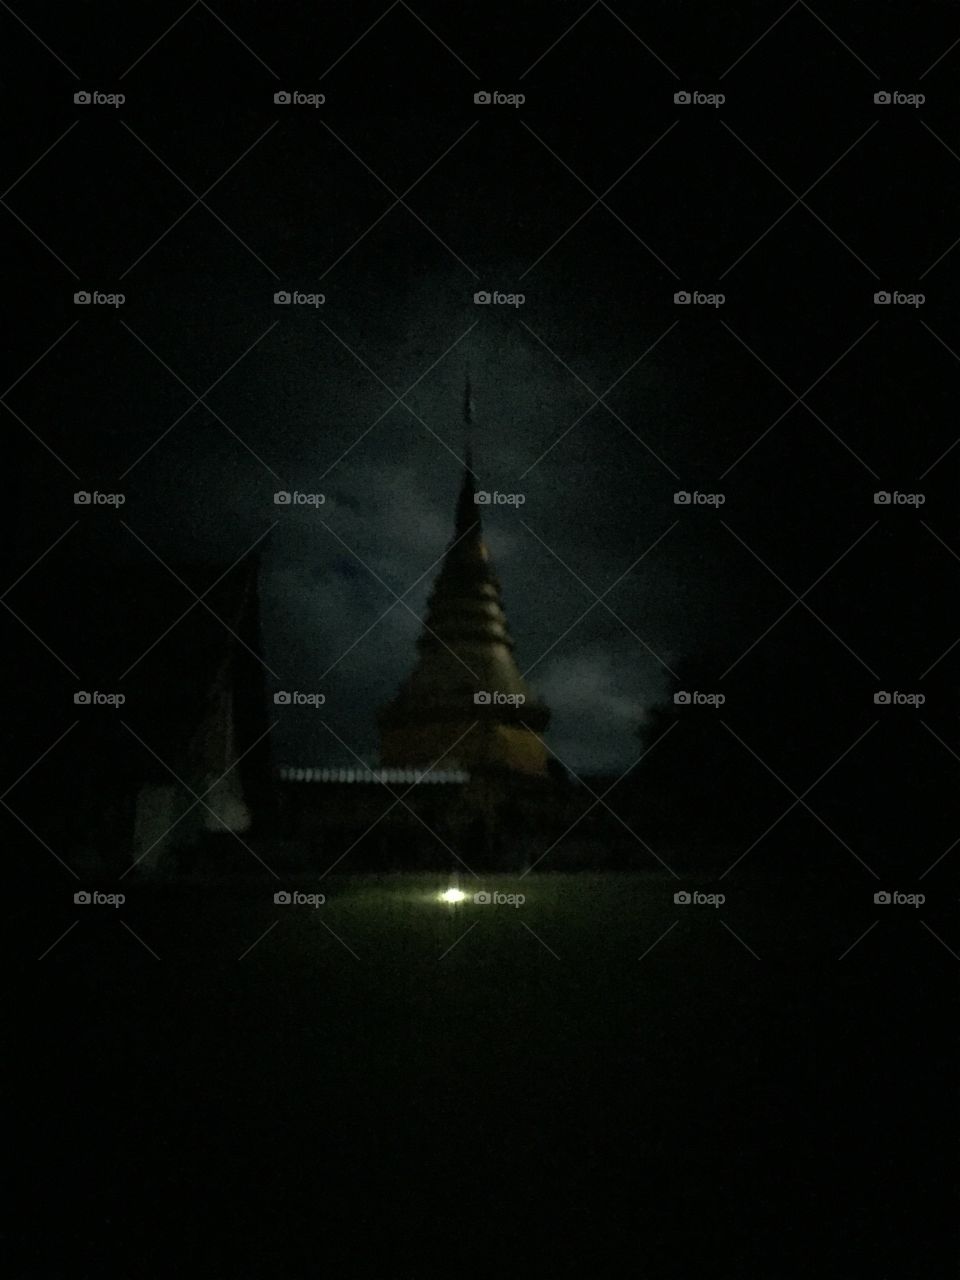 Wat Phra That Chom Ping
Lampang